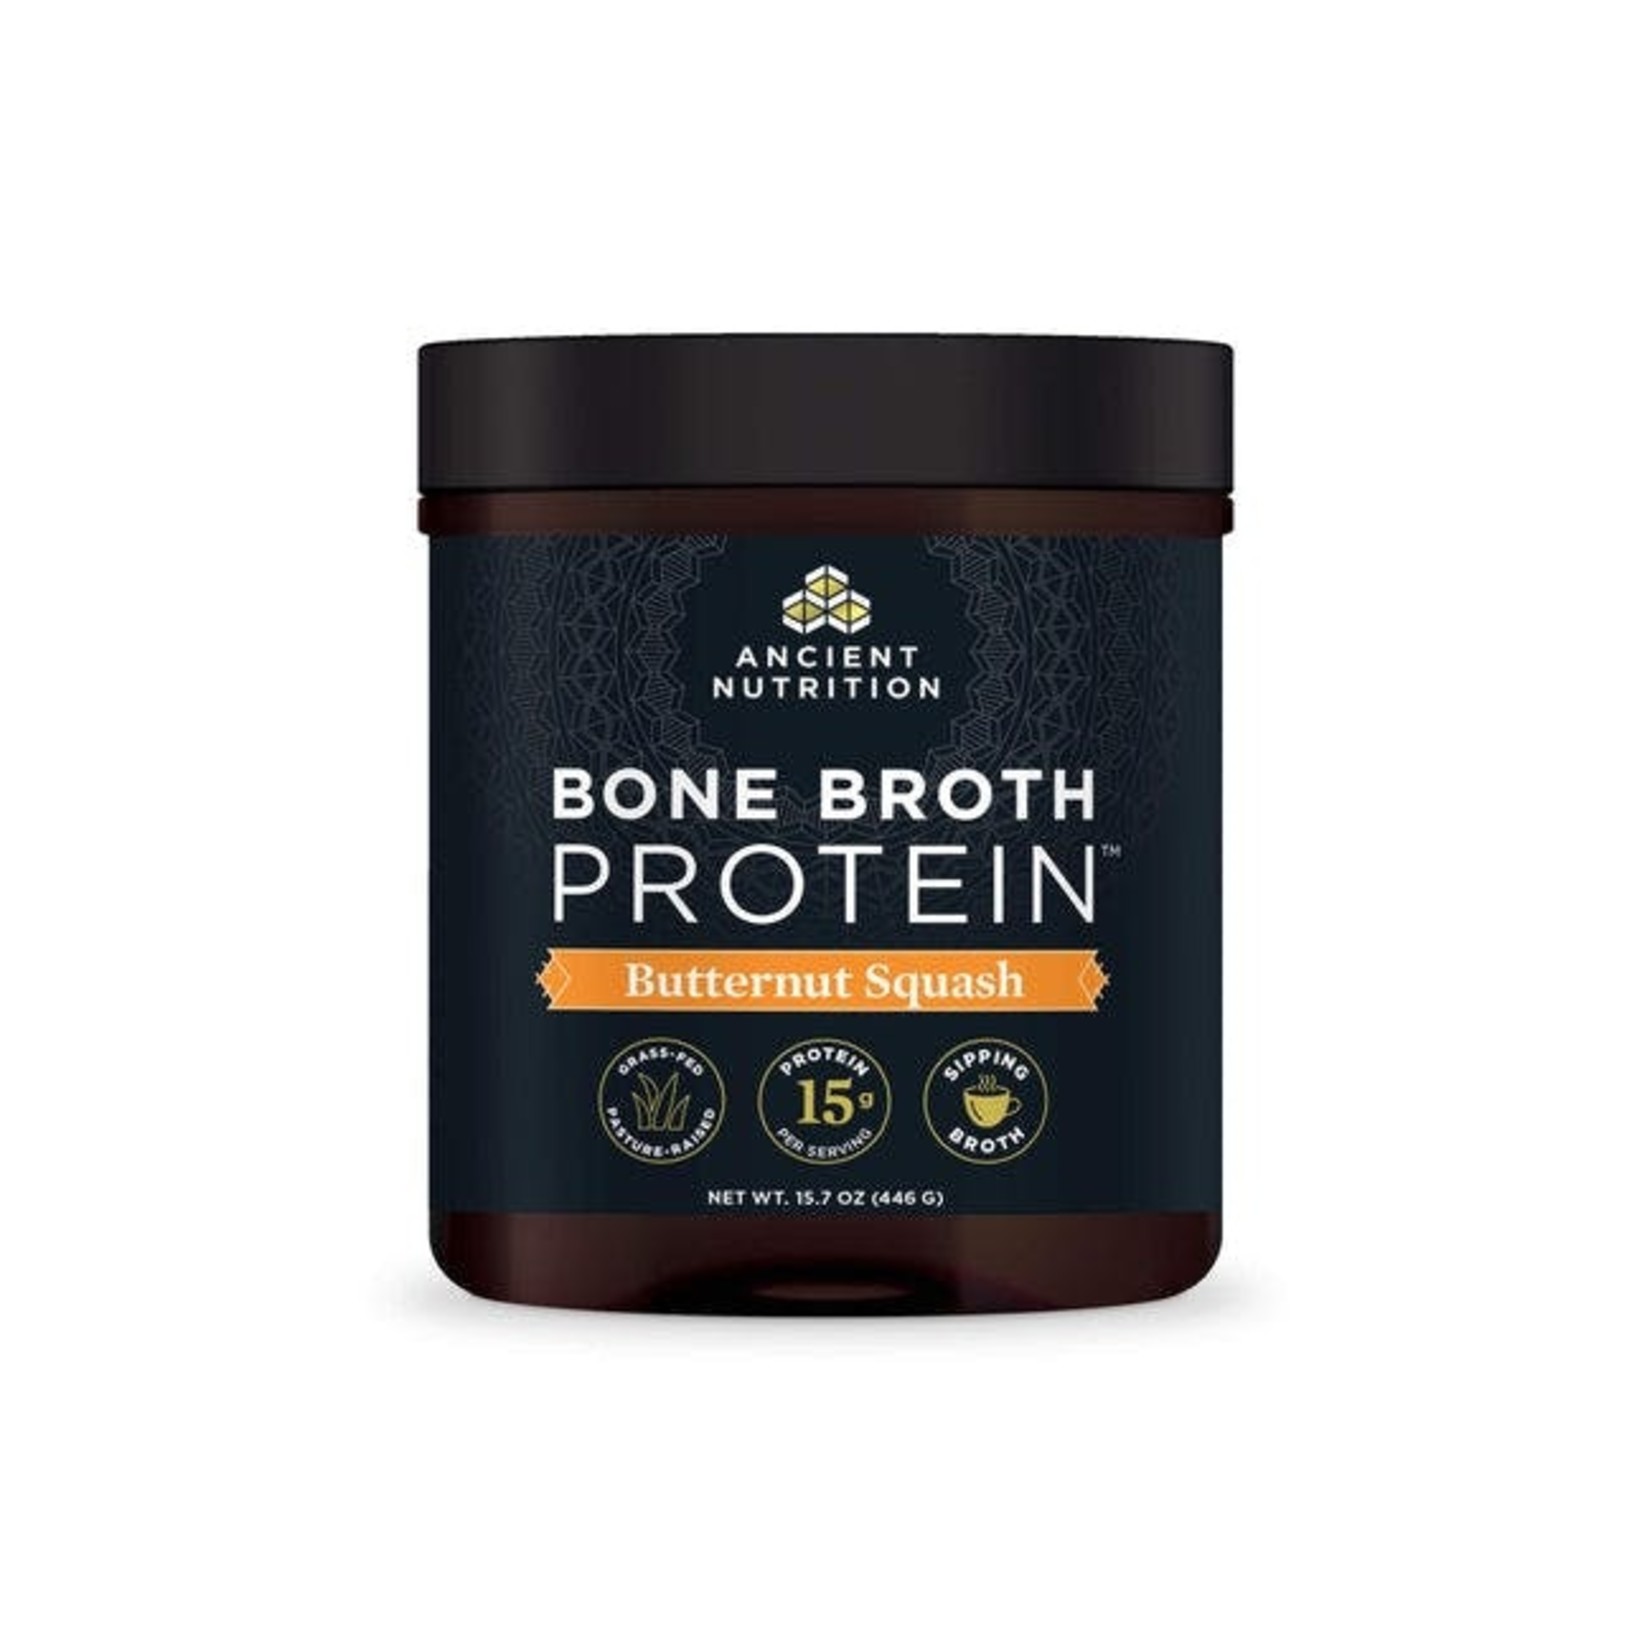 Ancient Nutrition Ancient Nutrition - Bone Broth Protein Butternut Squash - 445 g